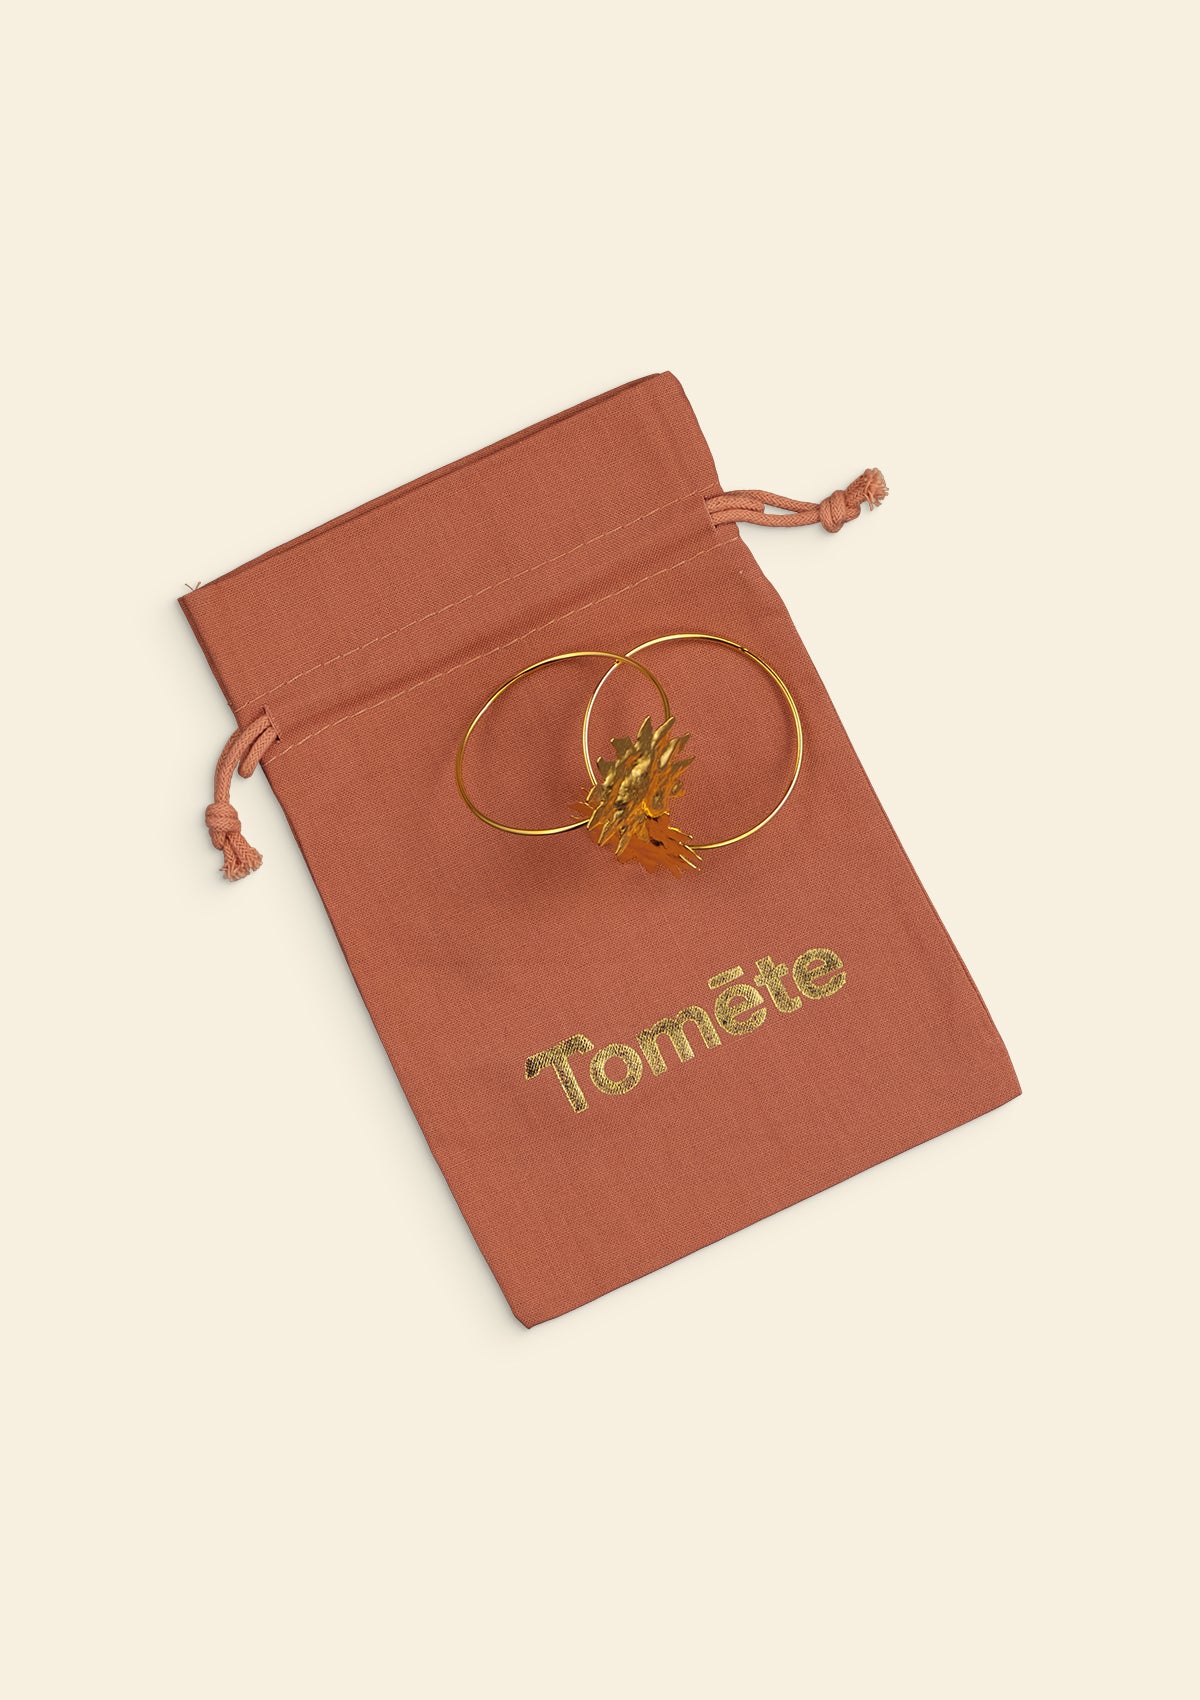 The Sun gold jewelry napkin ring